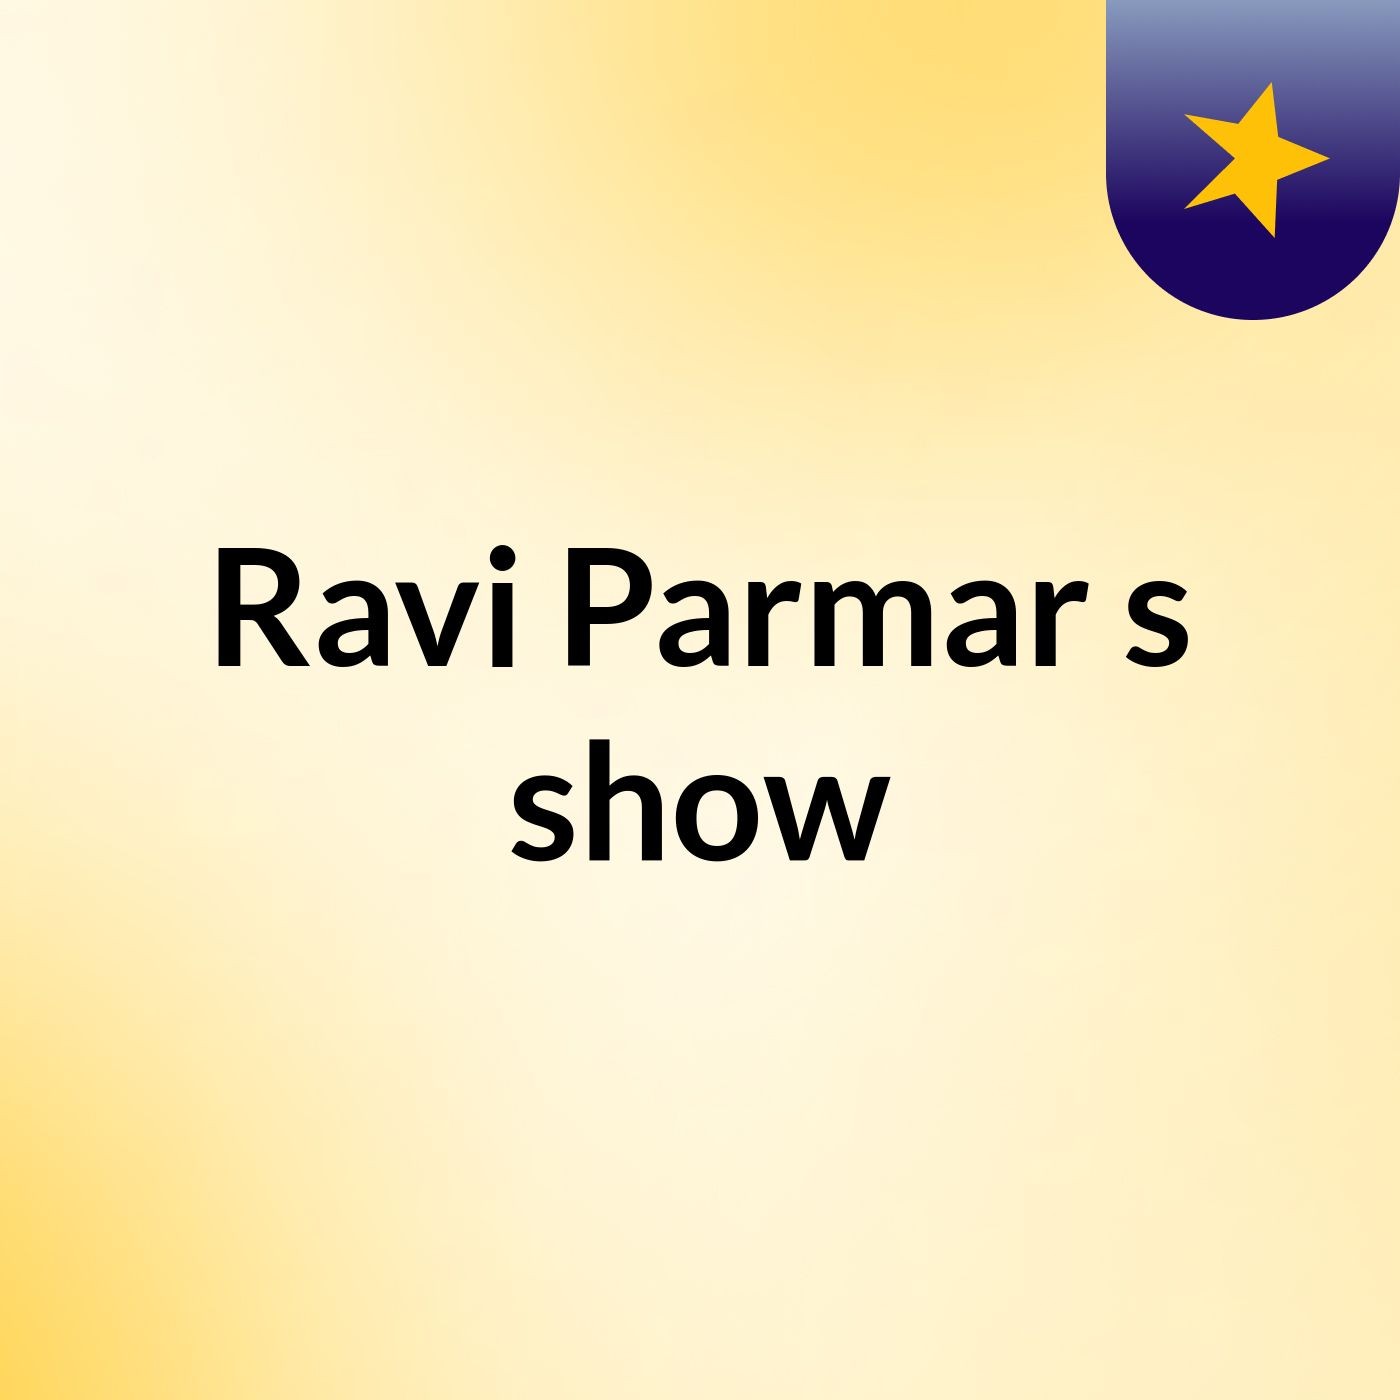 Ravi Parmar's show